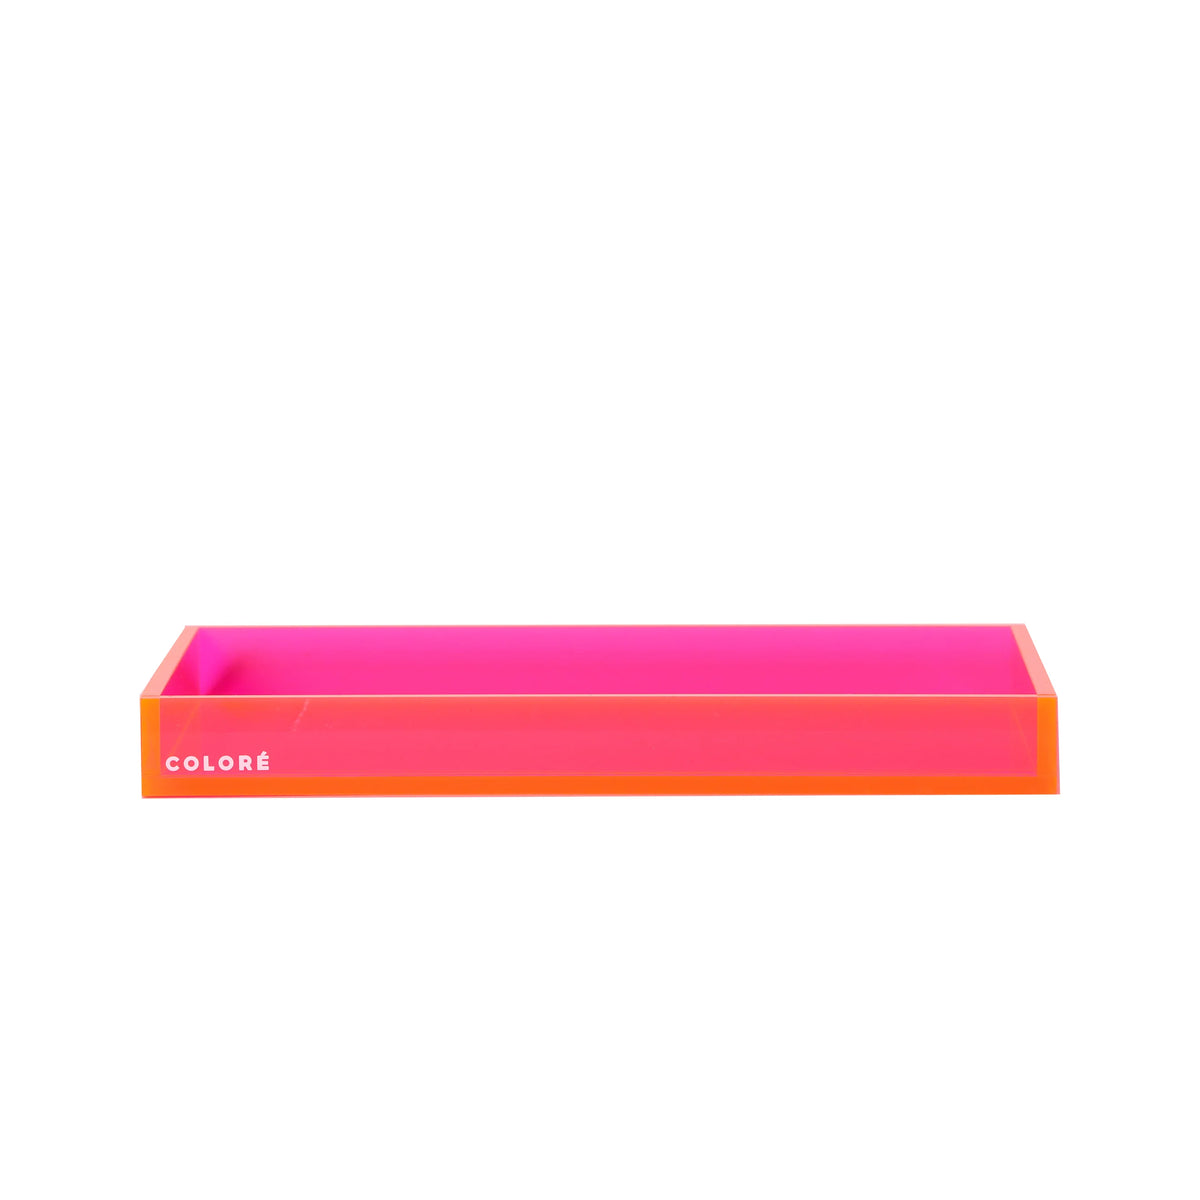 Medium Slim Acrylic Tray - Neon Pink